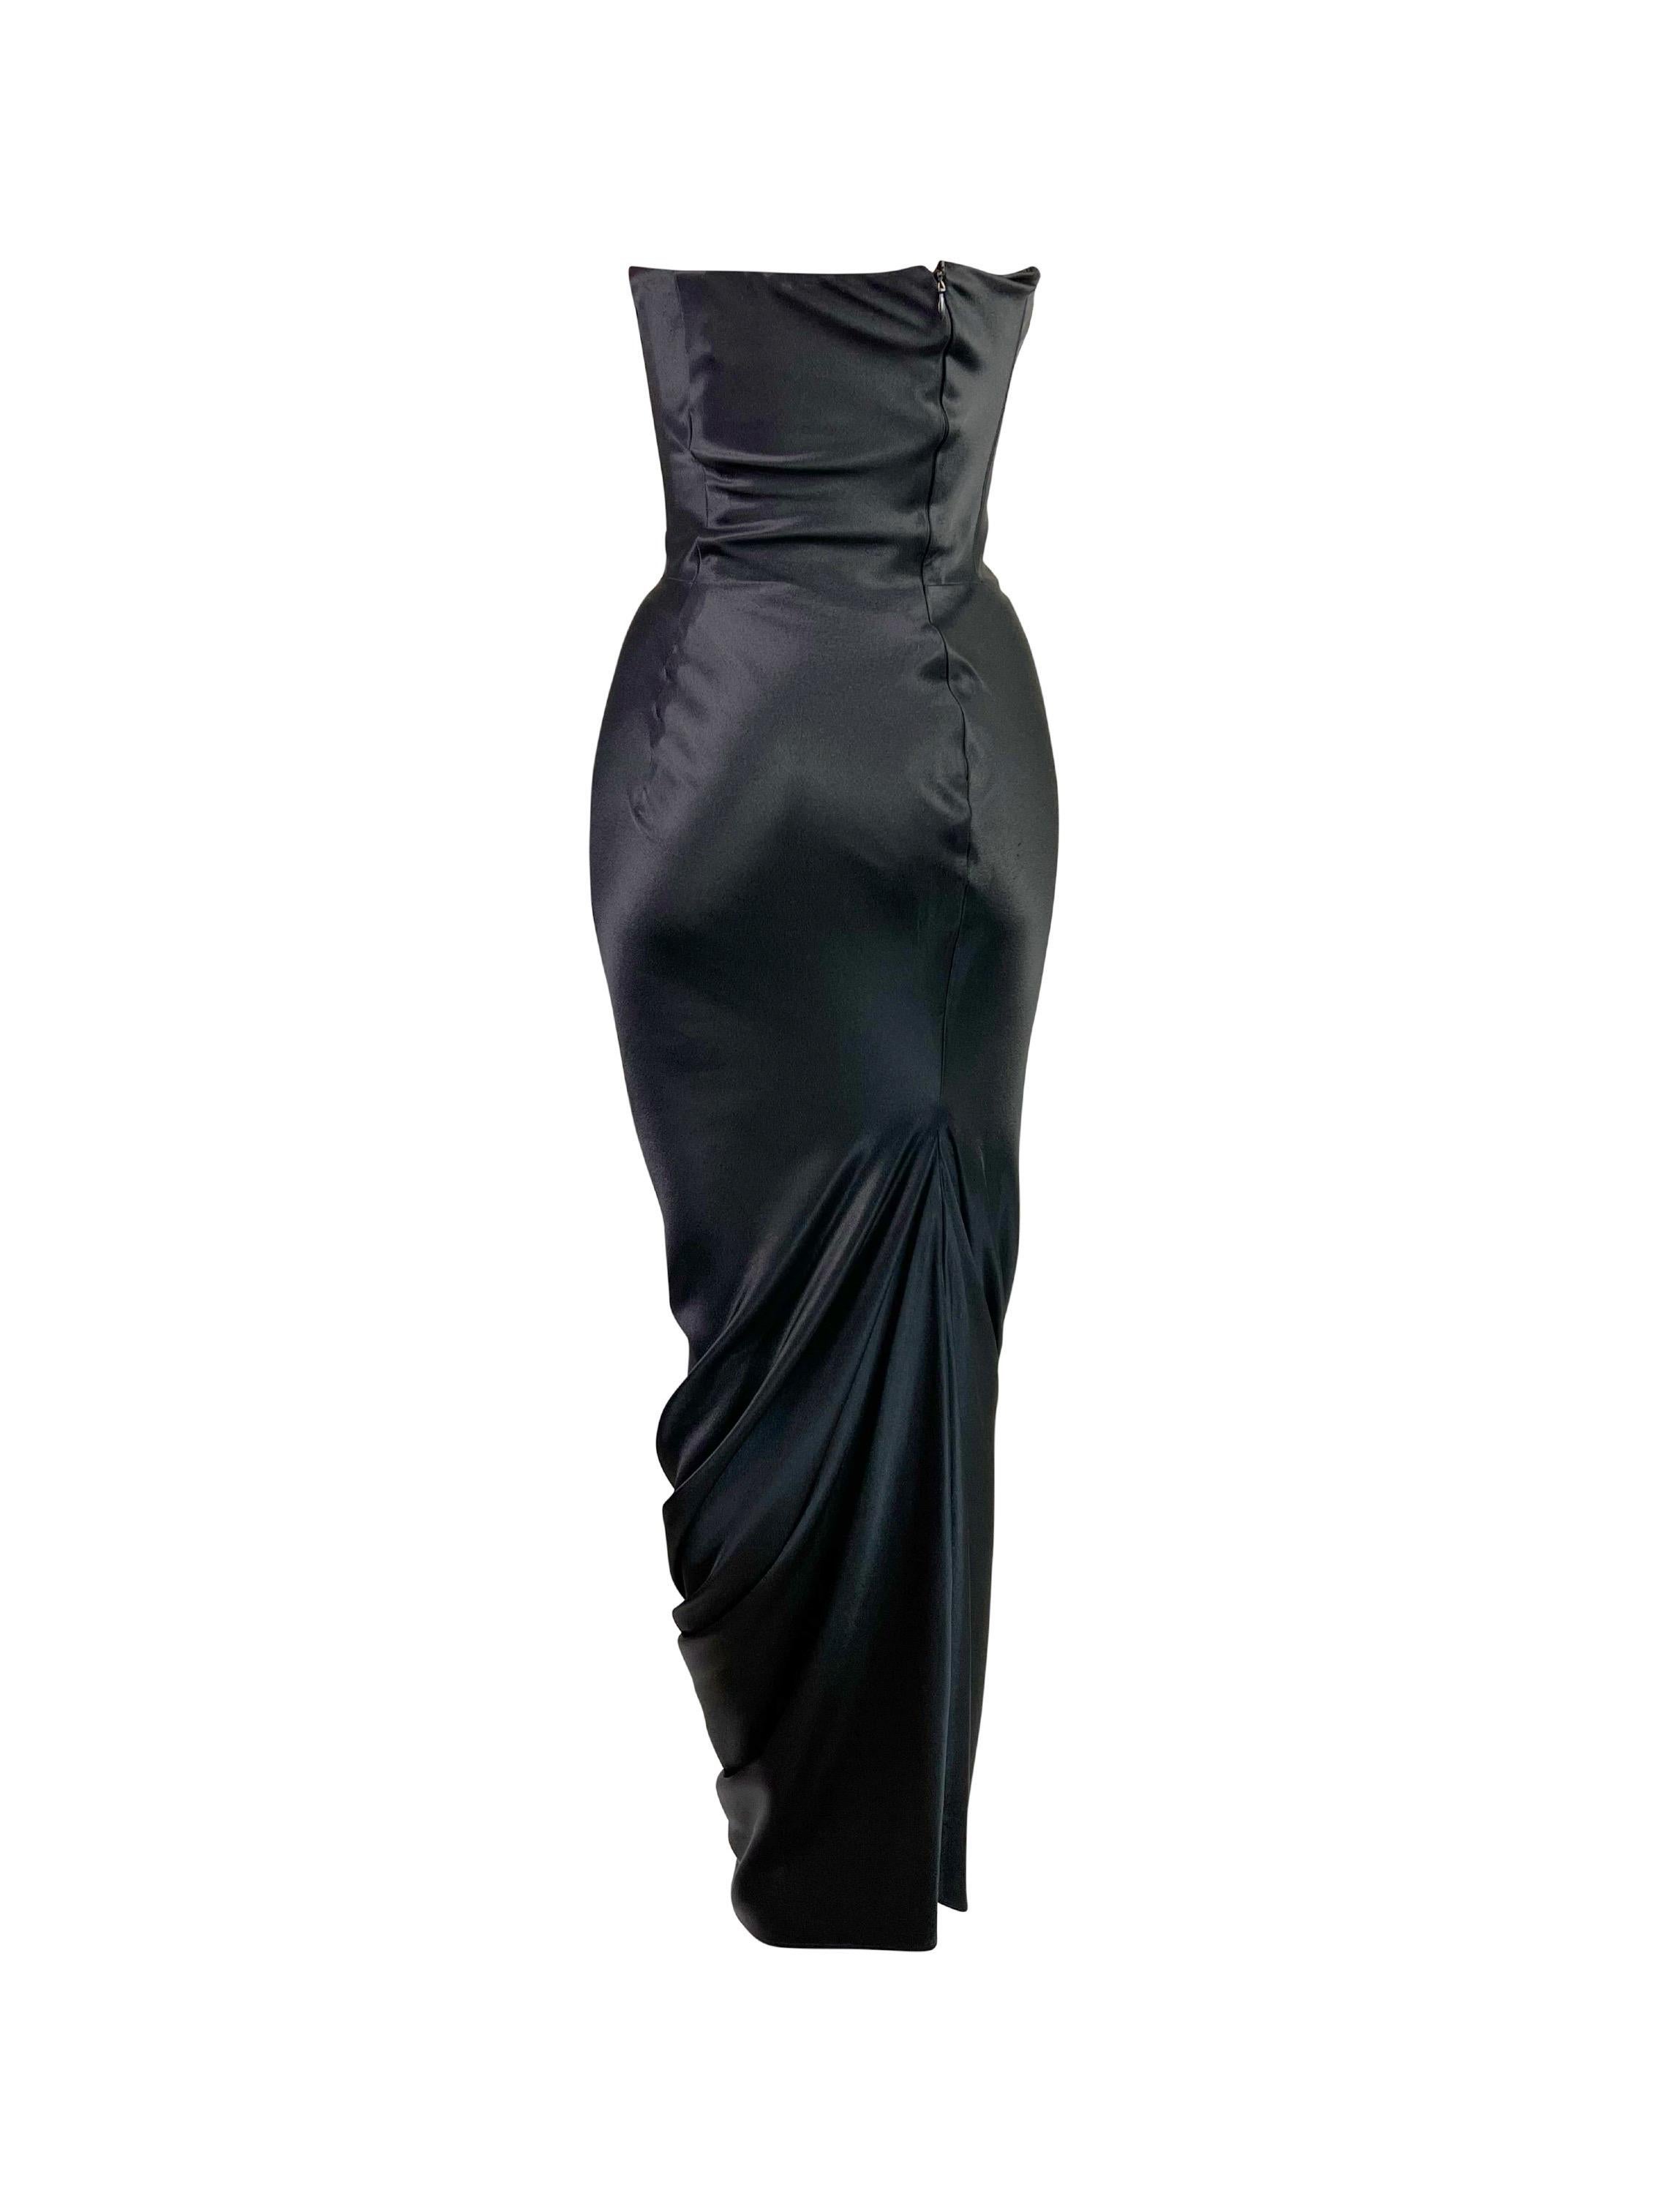 John Galliano, automne 1995, robe à corset en vente 3